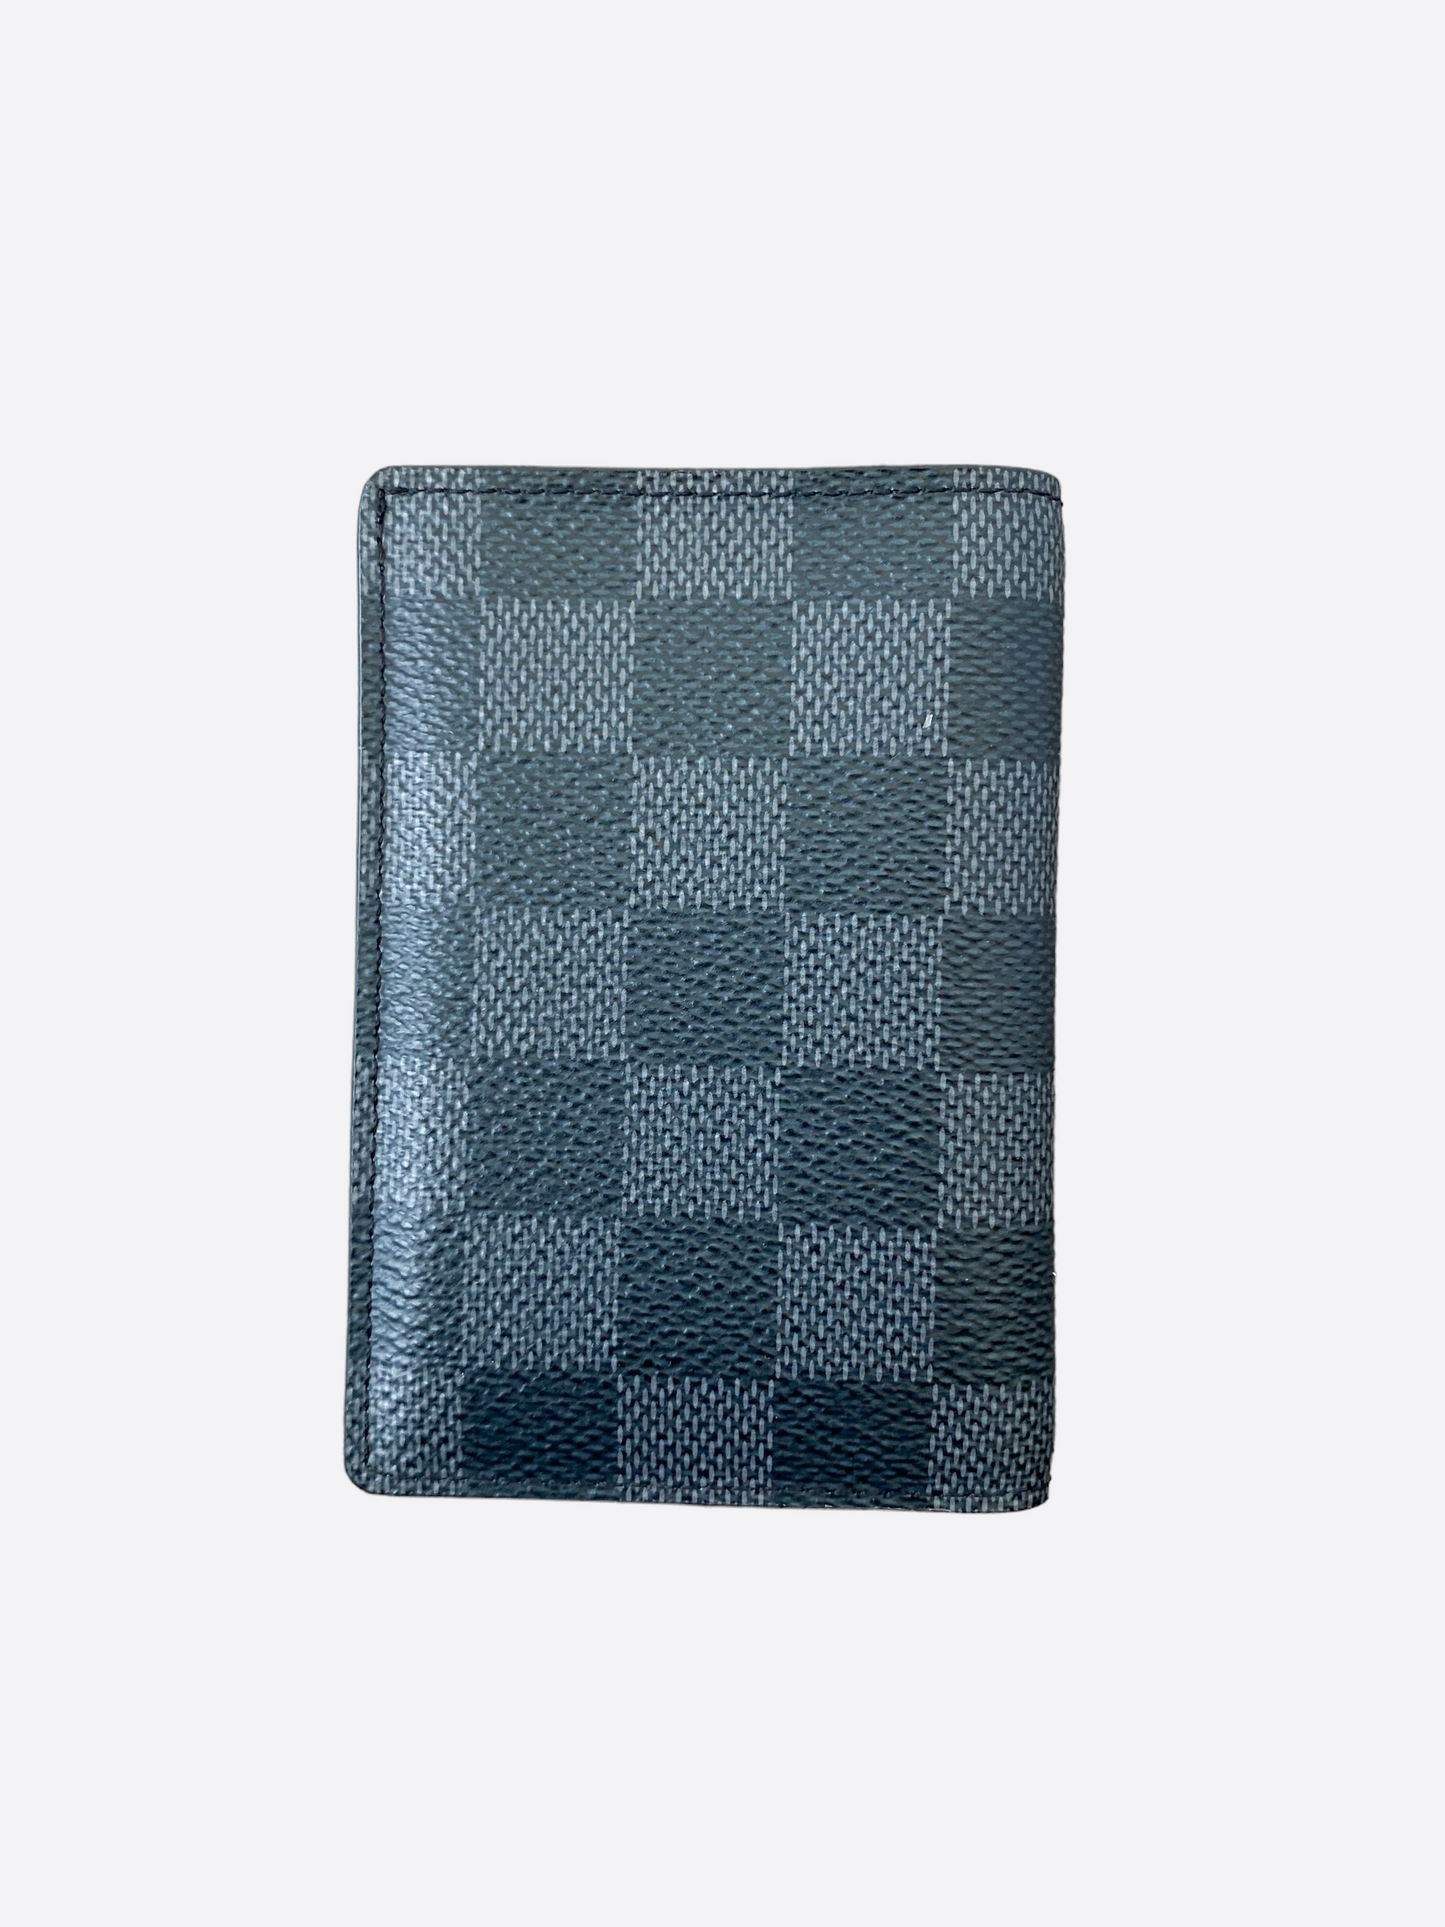 Louis Vuitton Coin Card Holder Damier Graphite Grey/BlackLouis Vuitton Coin Card  Holder Damier Graphite Grey/Black - OFour